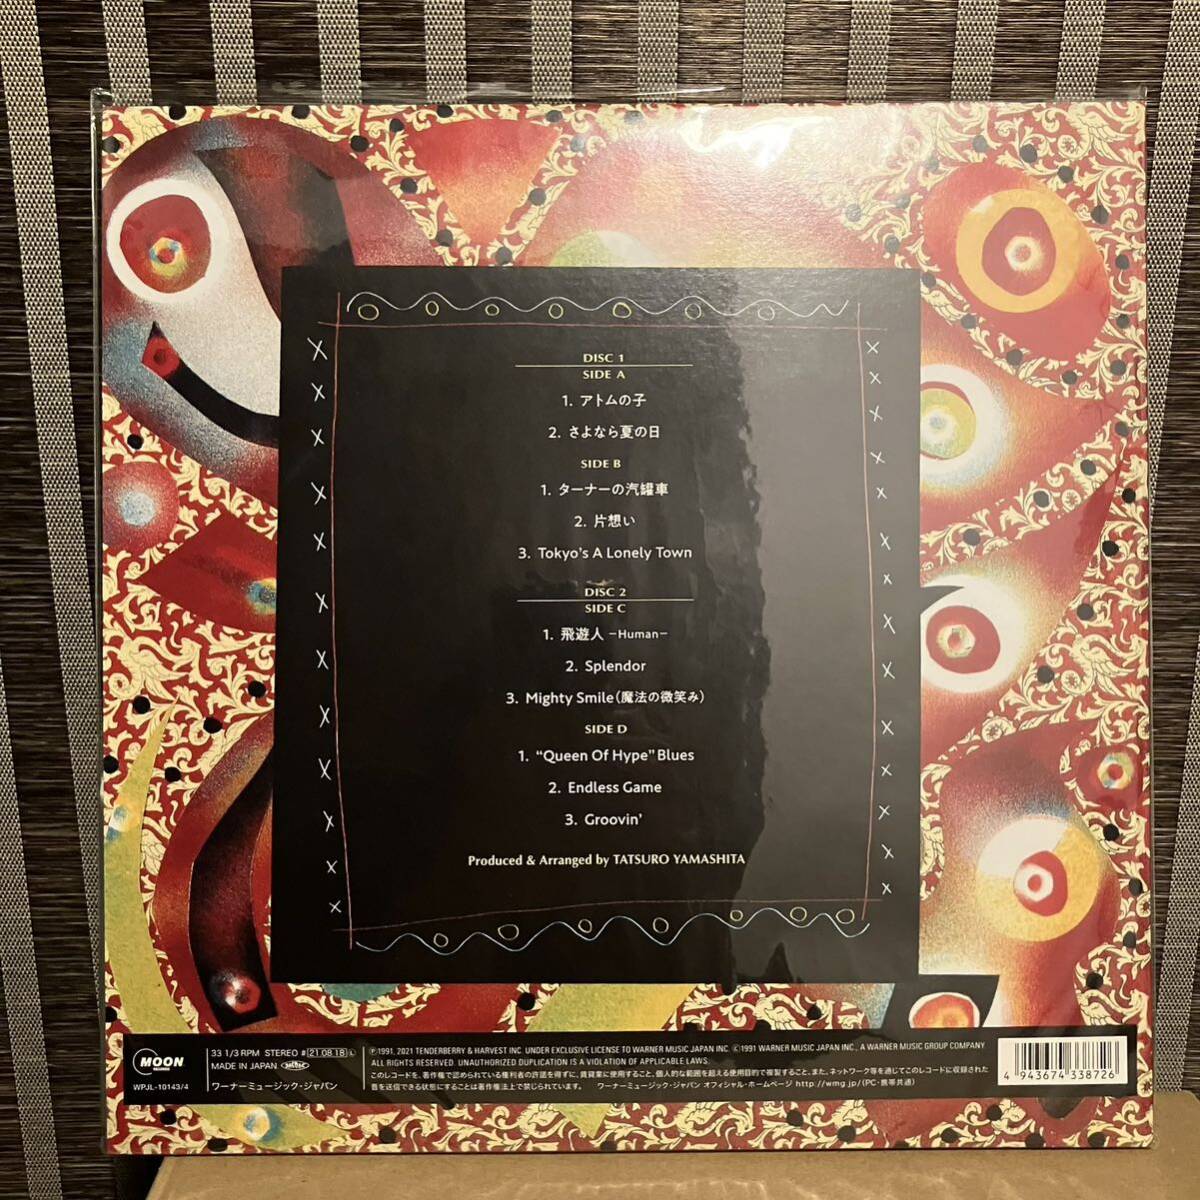 【LP+CD】山下達郎 ARTISAN アルチザン 30周年リマスター アナログレコード 180g重量盤 特典付き